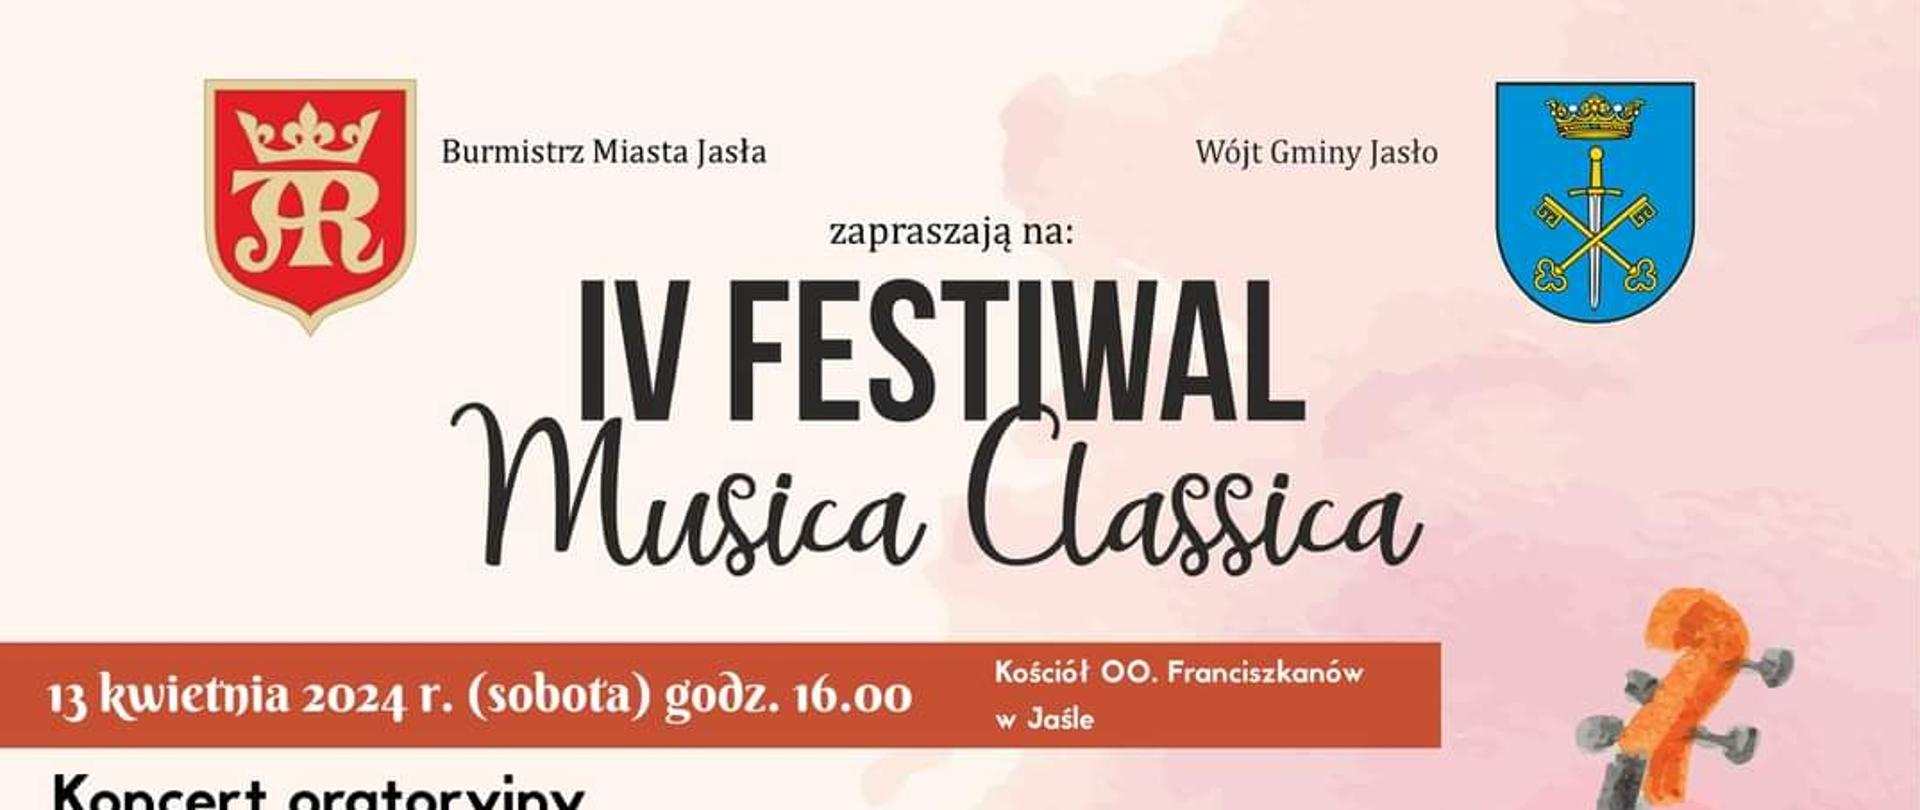 IV Festiwal Musica Classica